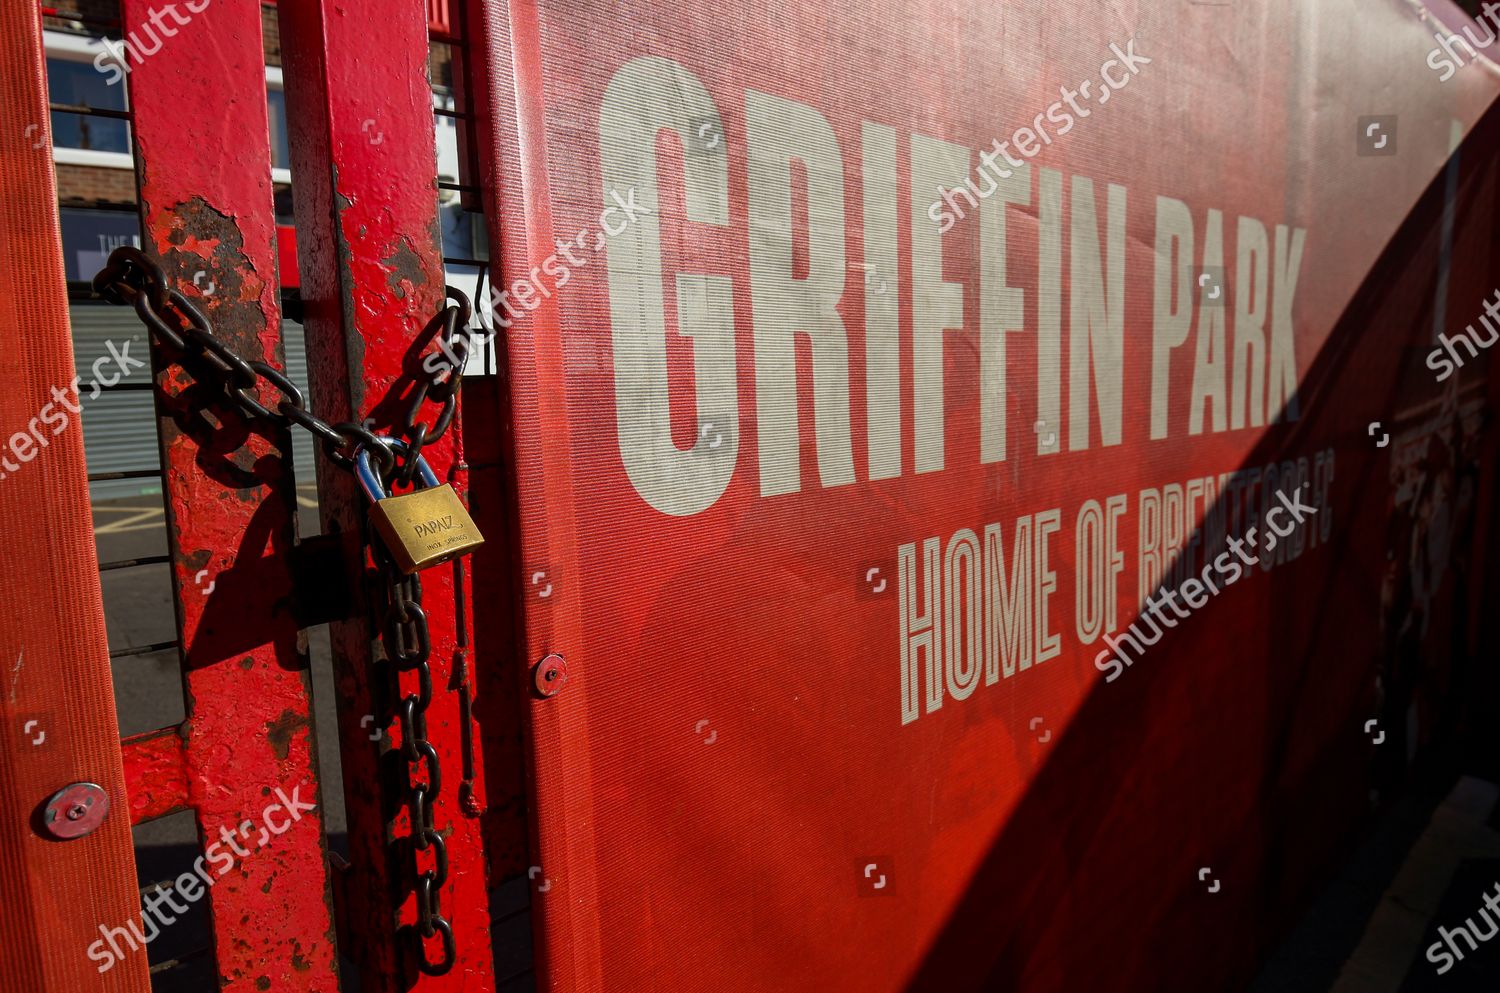 Griffin Park Home Brentford Football Club Still Editorial Stock